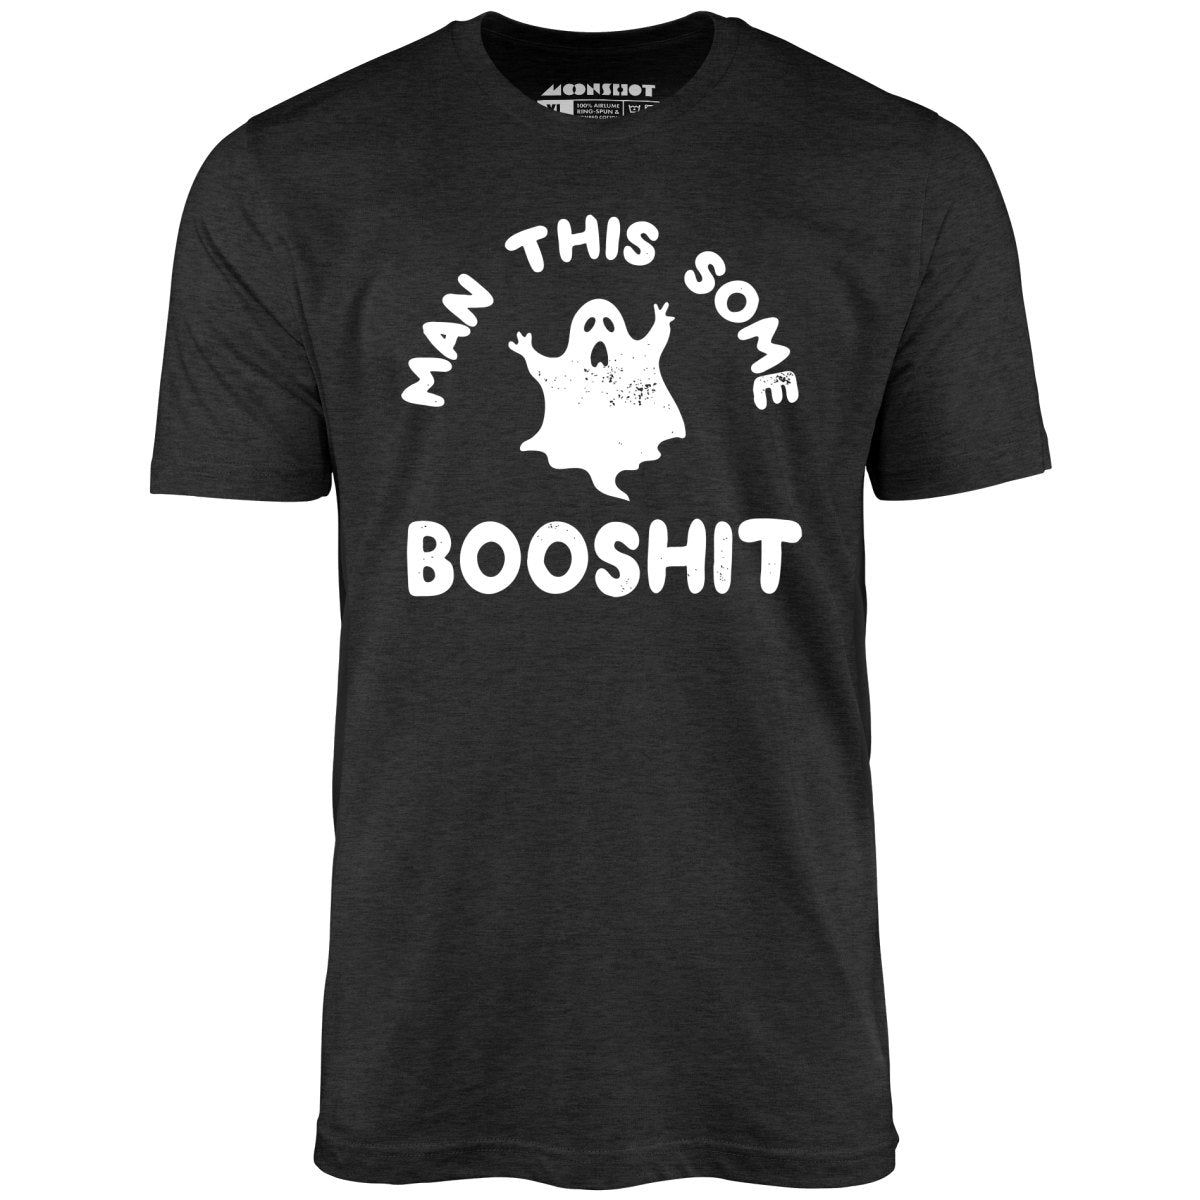 Man This Some Booshit - Unisex T-Shirt